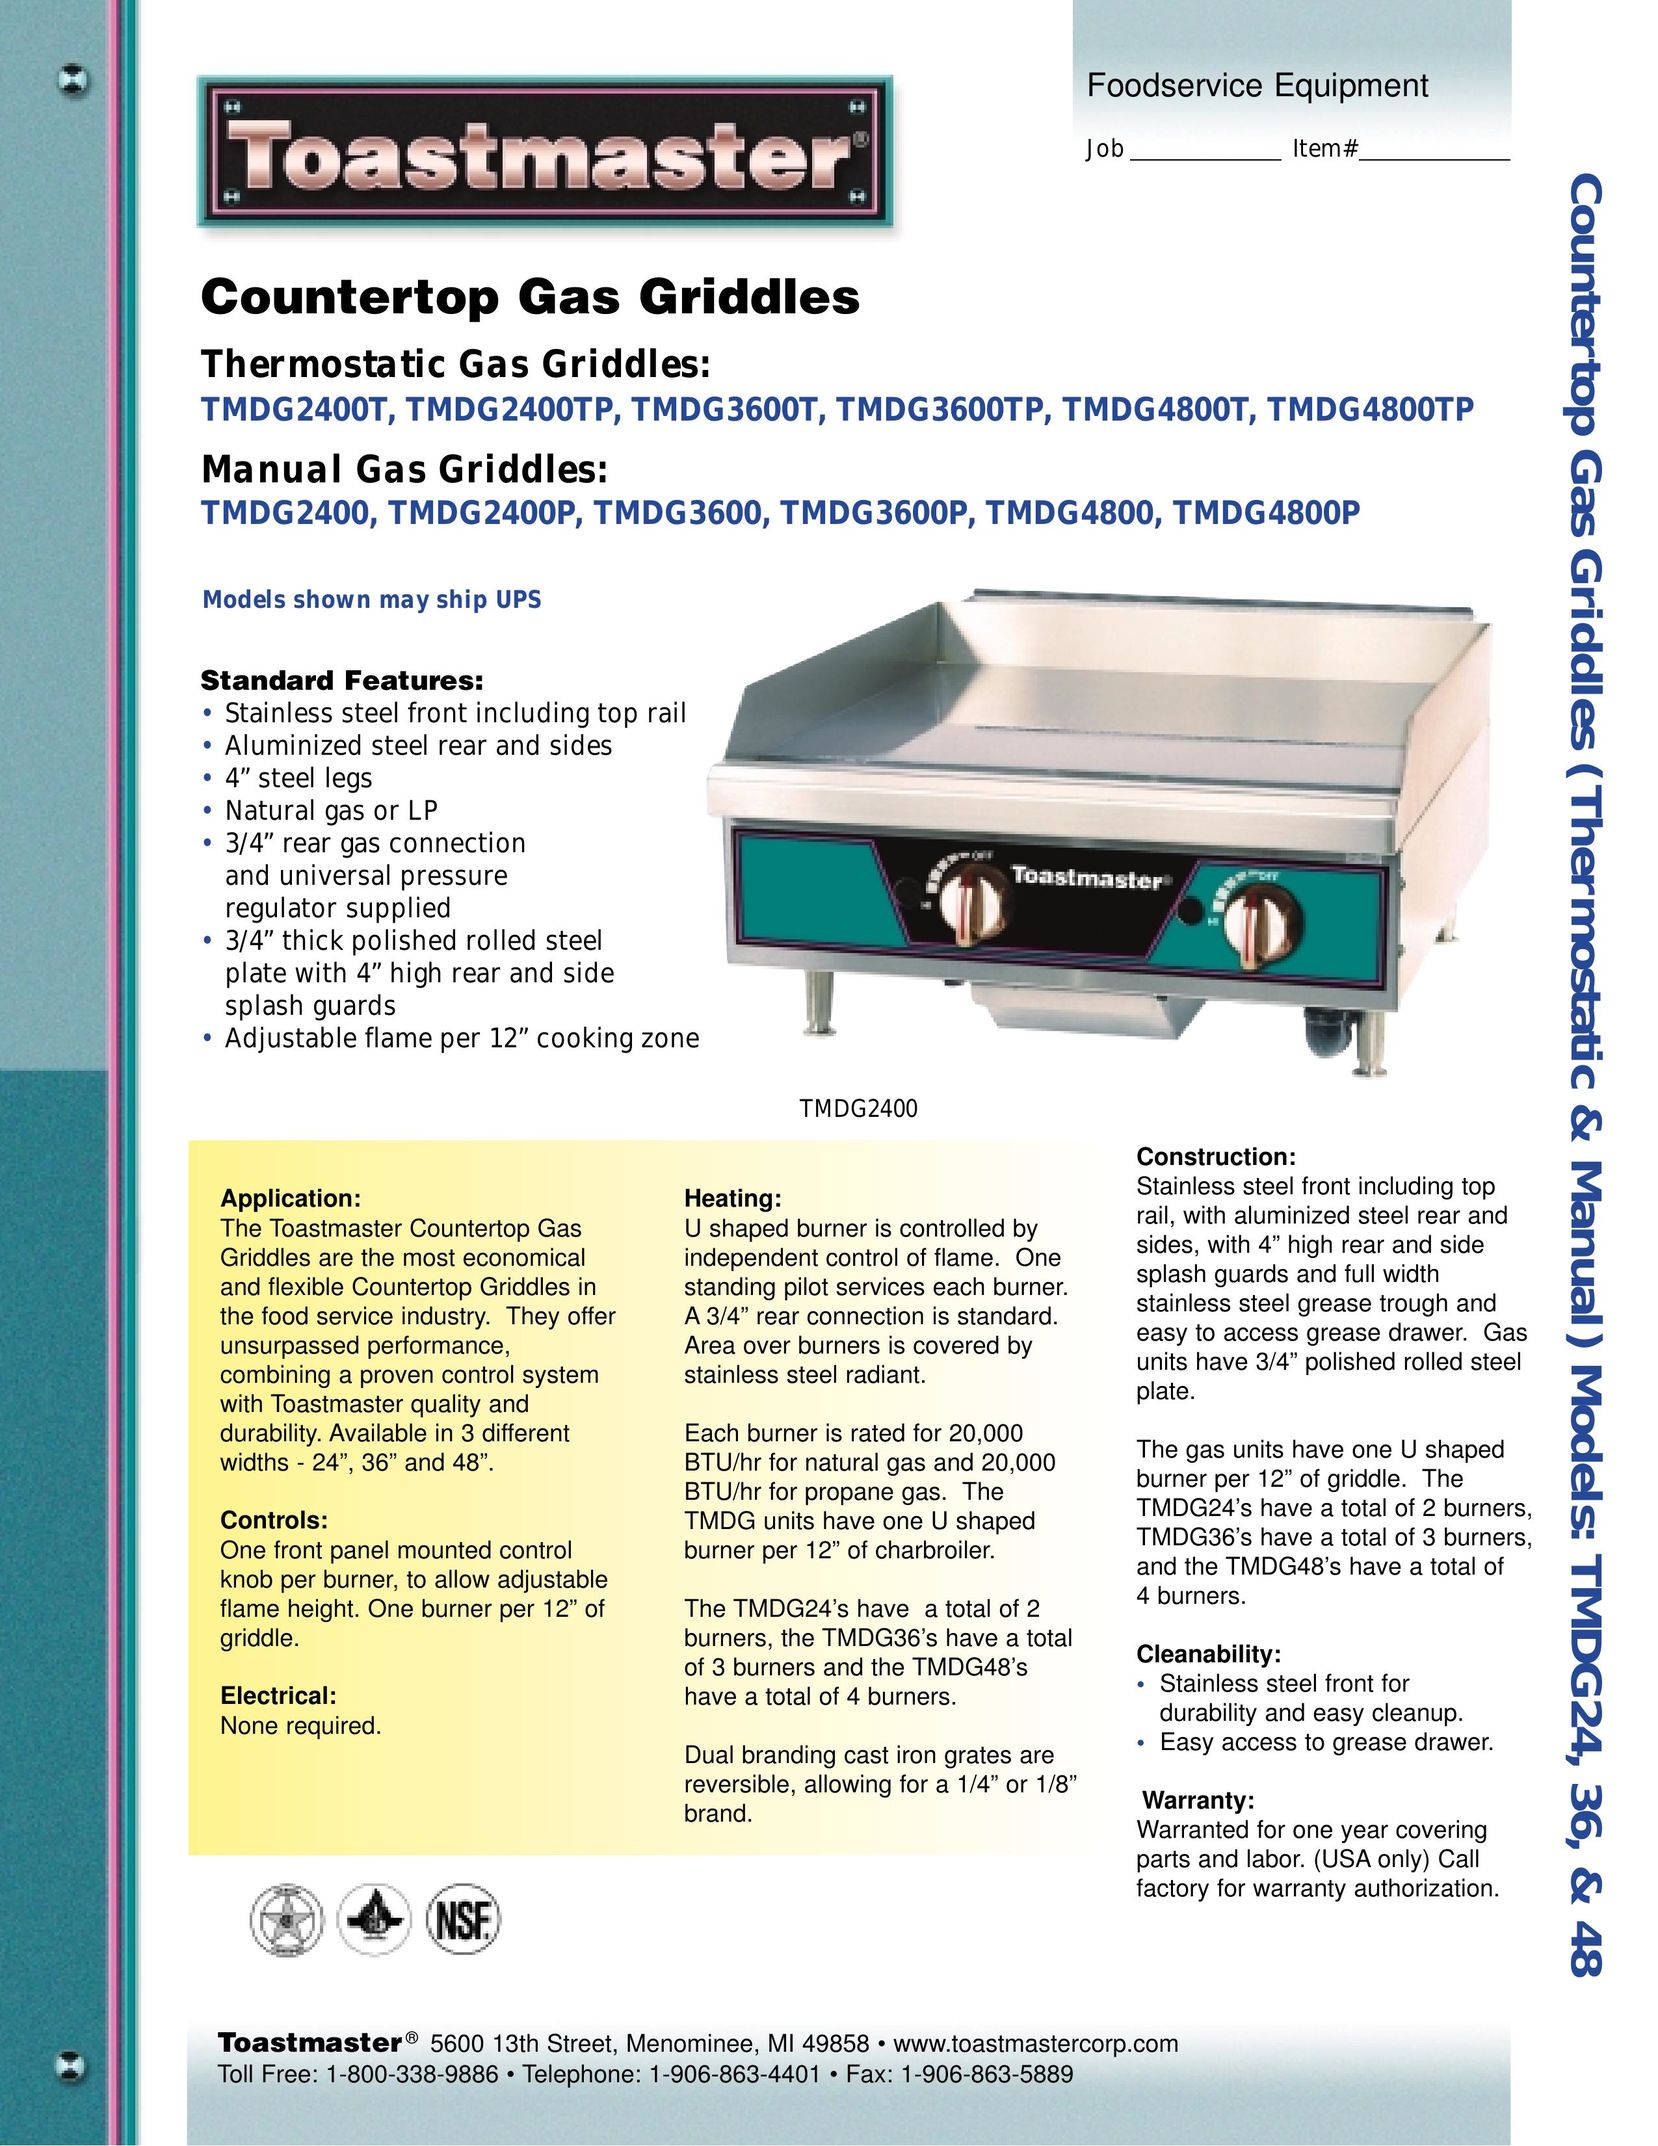 Toastmaster TMDG2400P Griddle User Manual